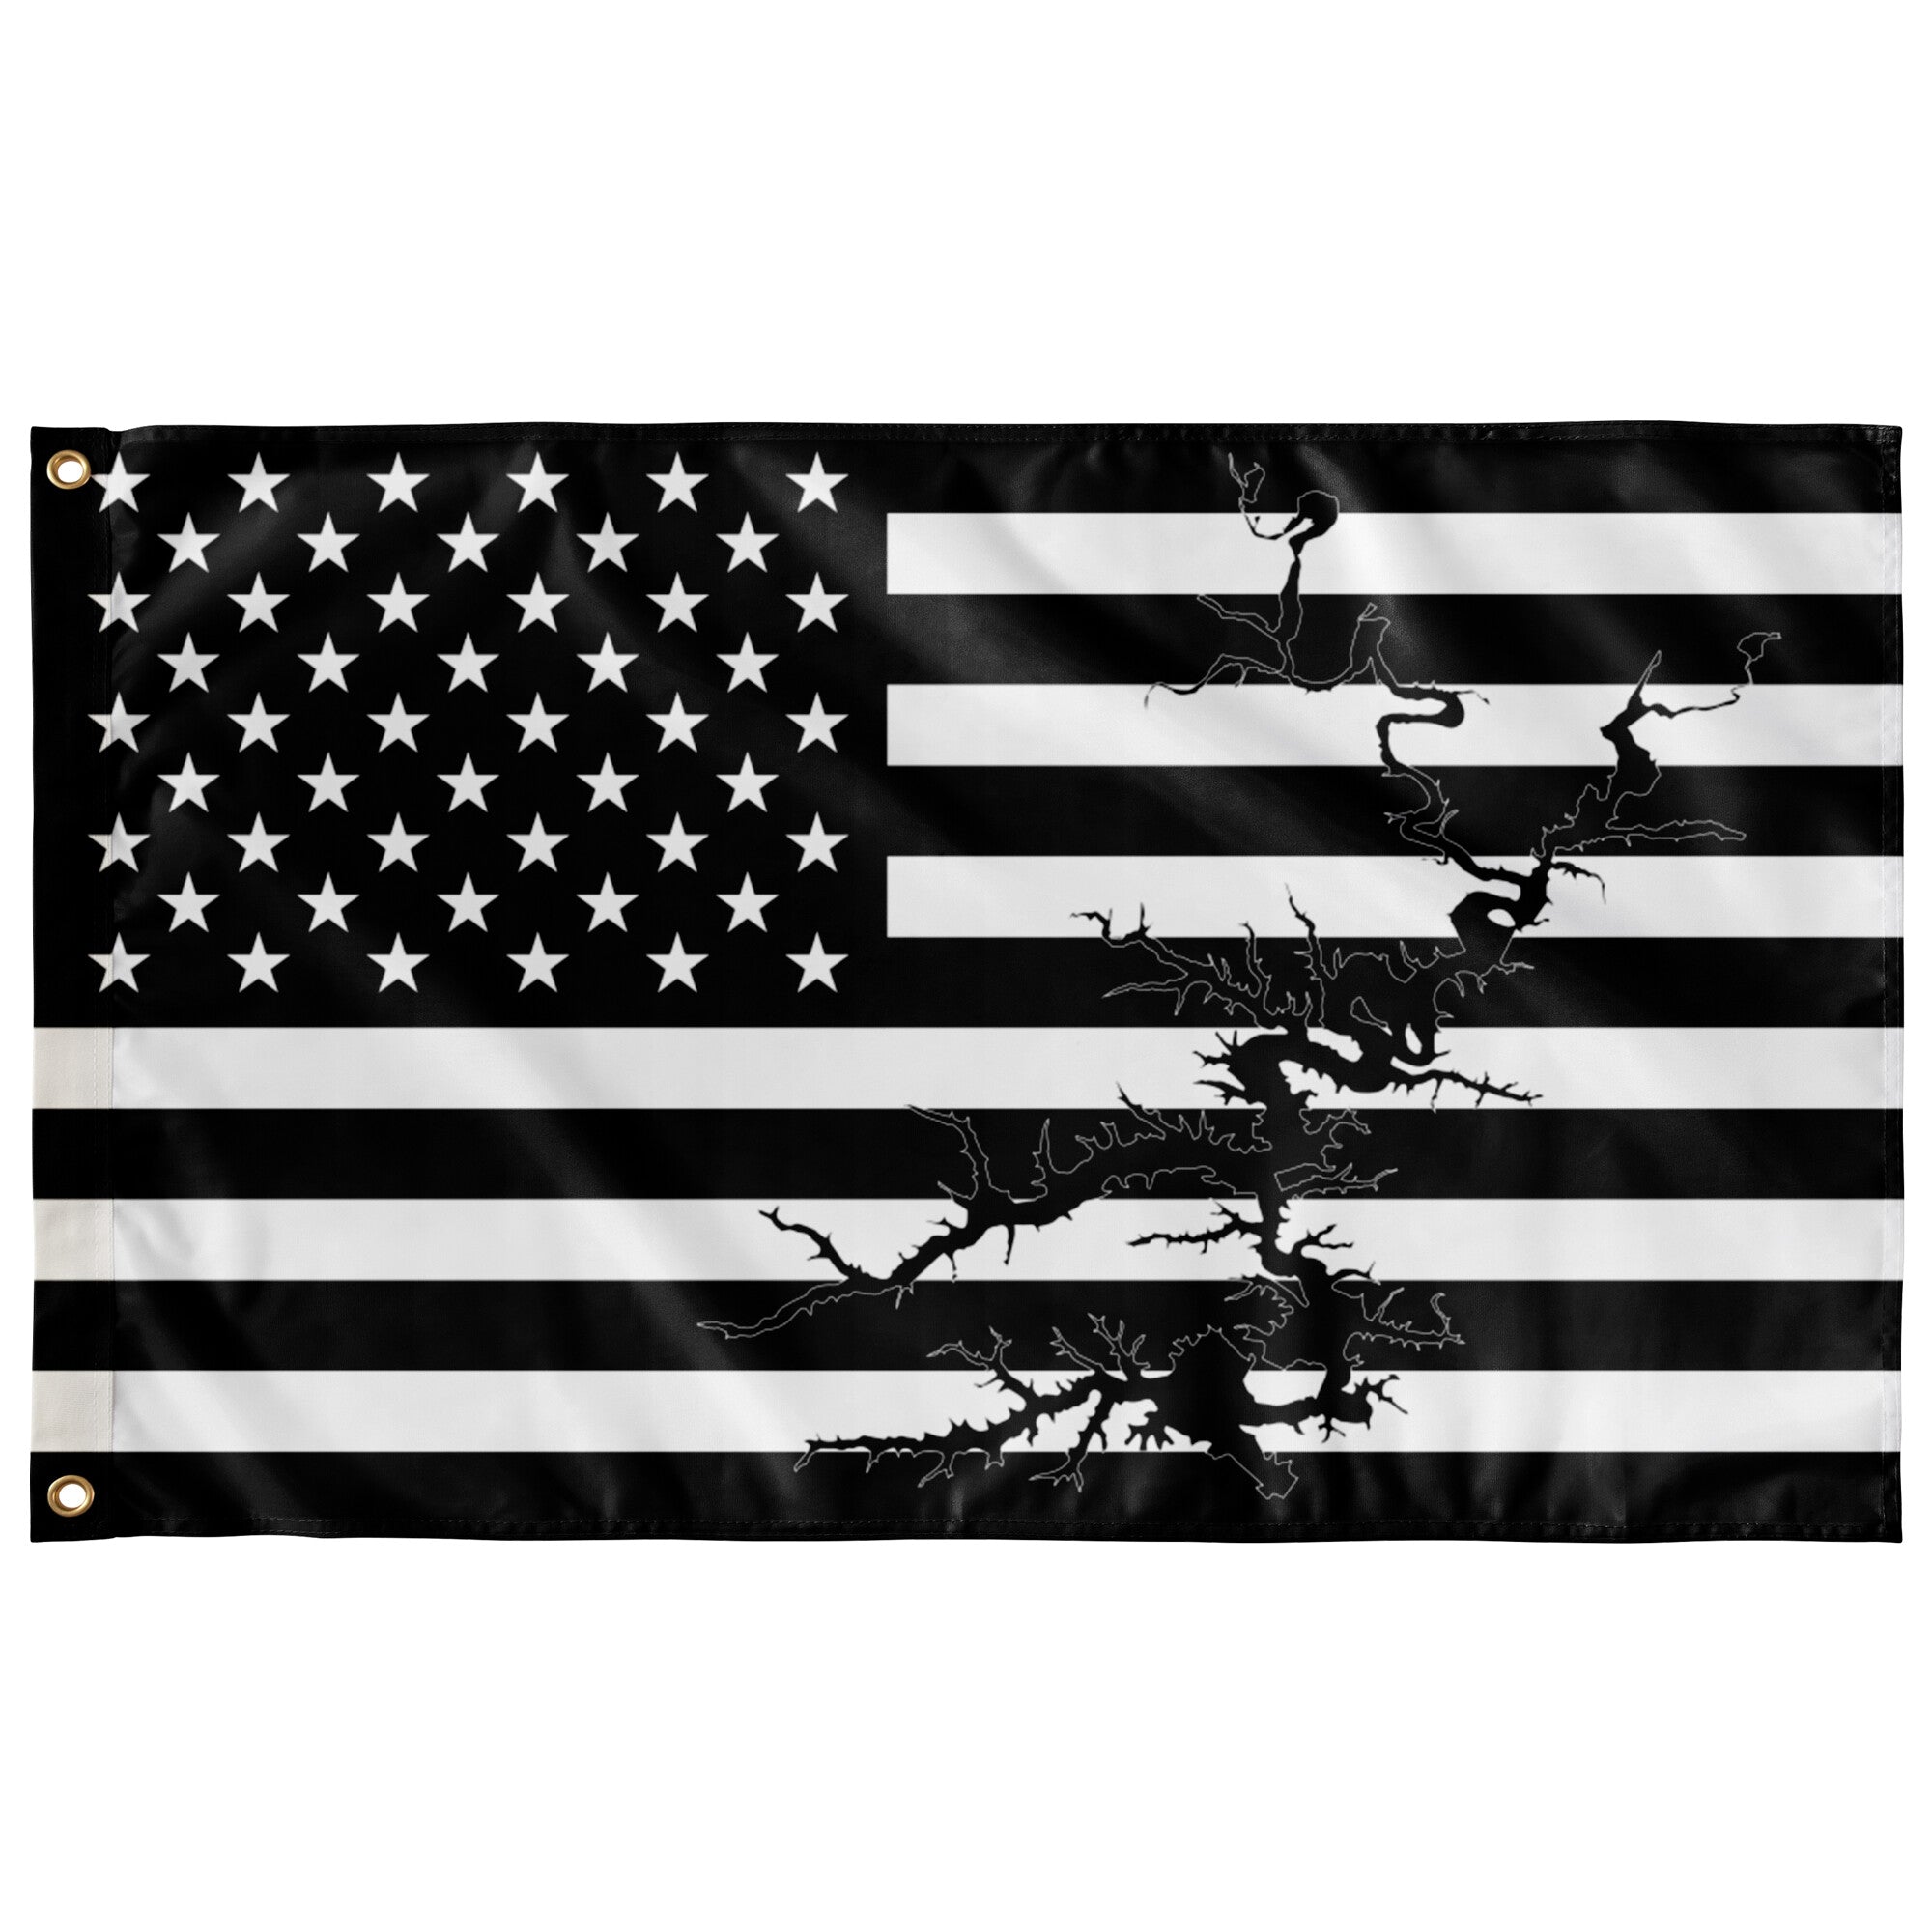 Tims Ford lake Black & White American Boat Flag Wall Art 